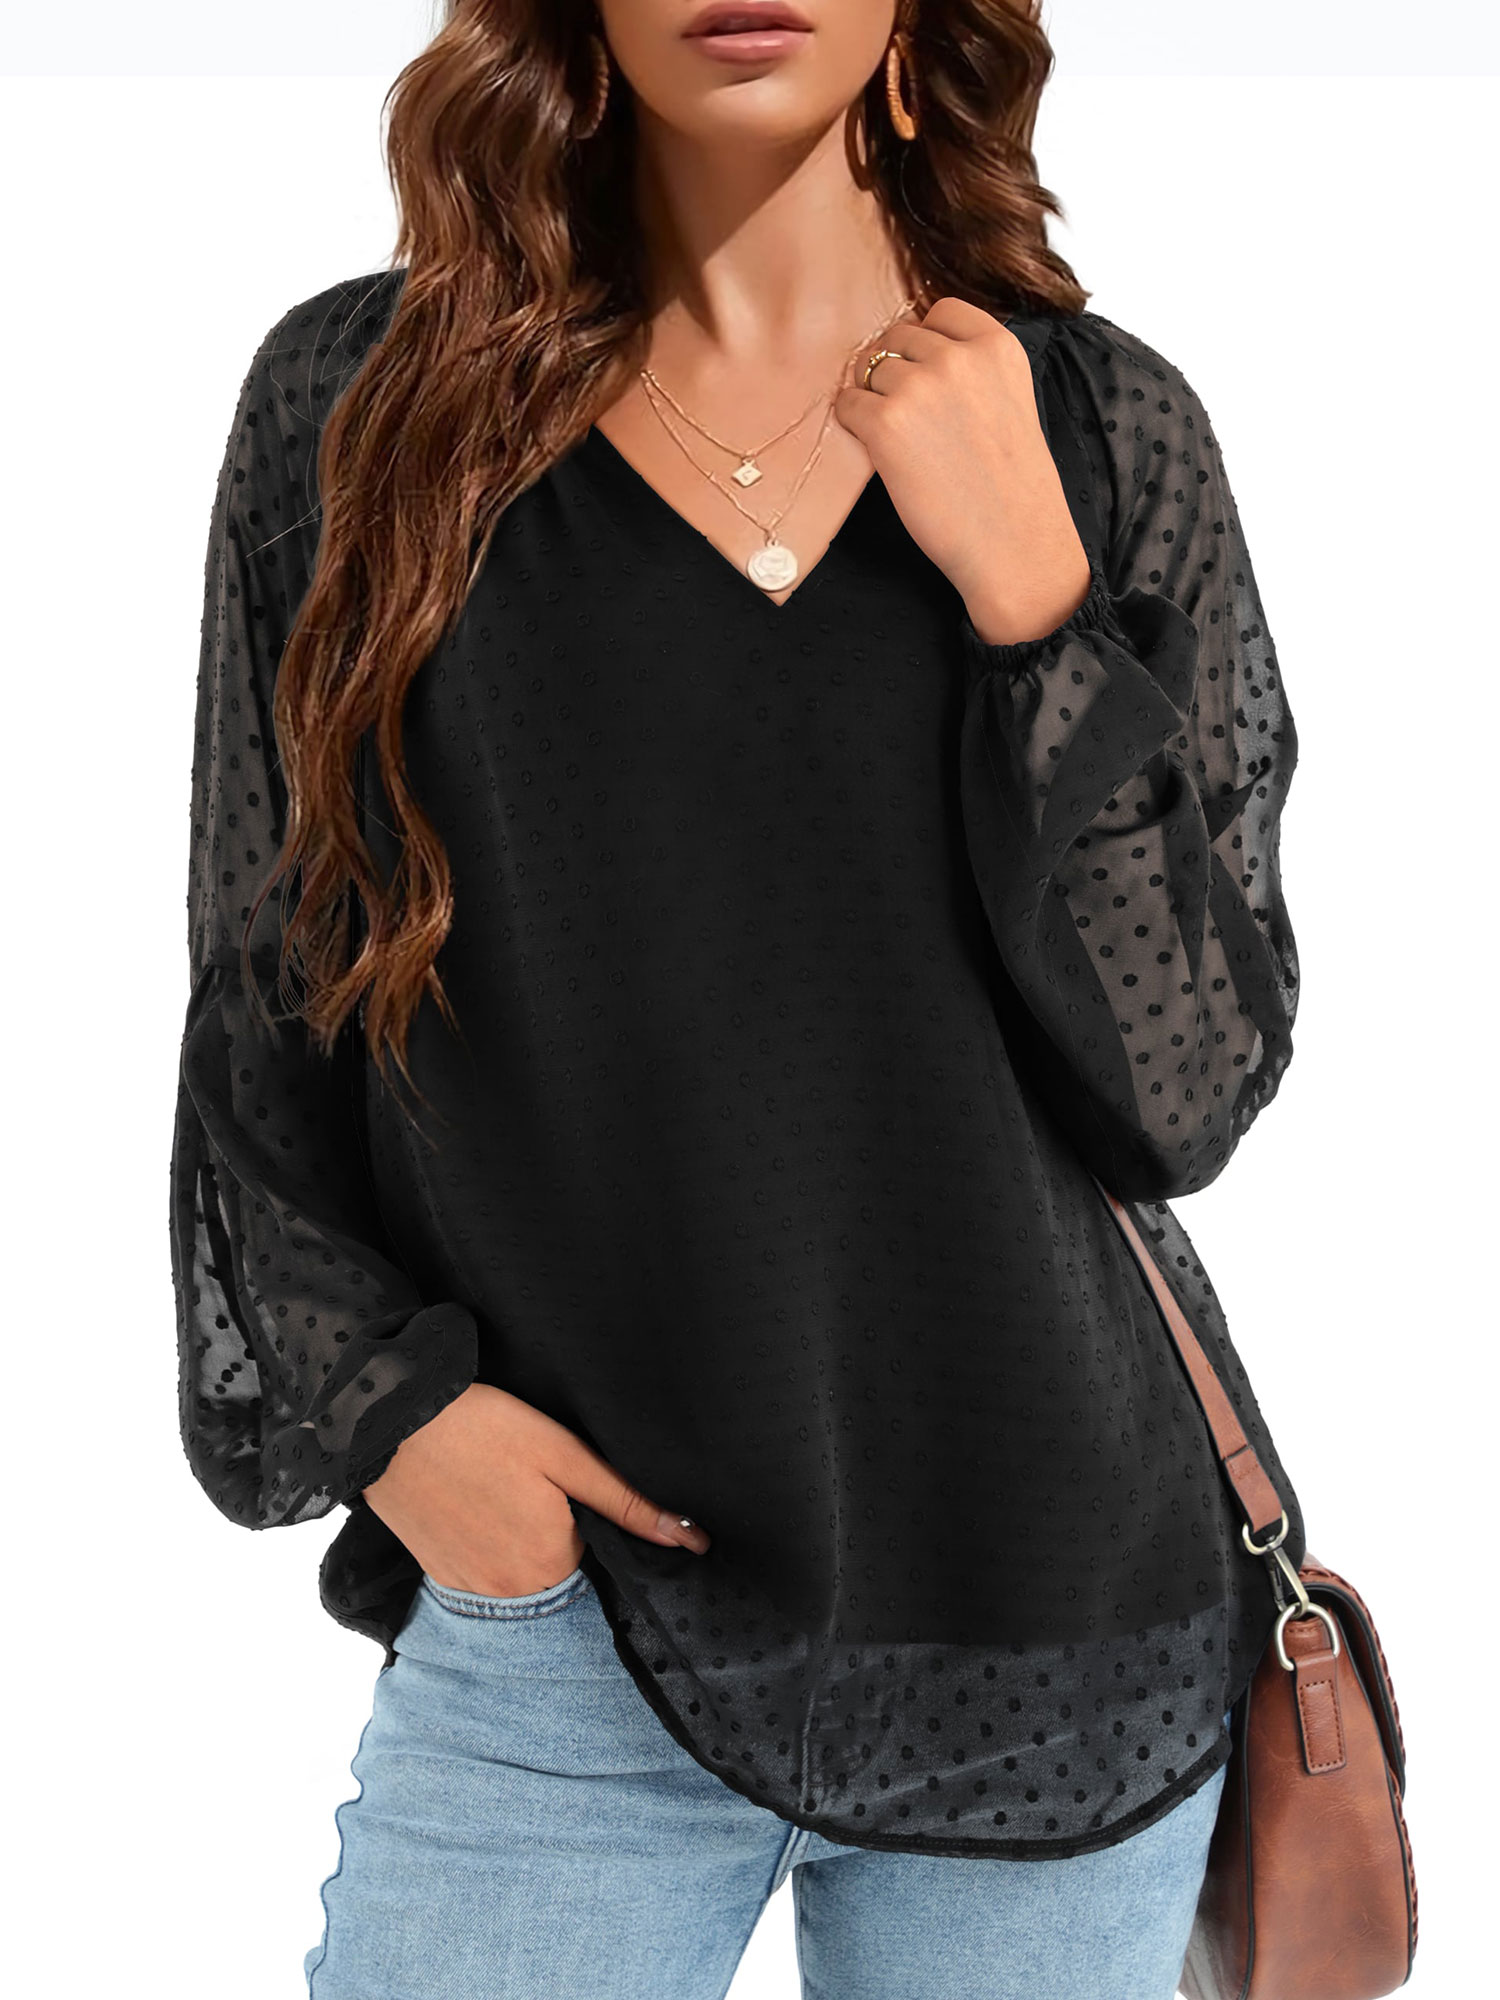 Amoretu Women Chiffon Blouses V Neck Lantern Long Sleeve Tops Shirts Black L - image 1 of 5